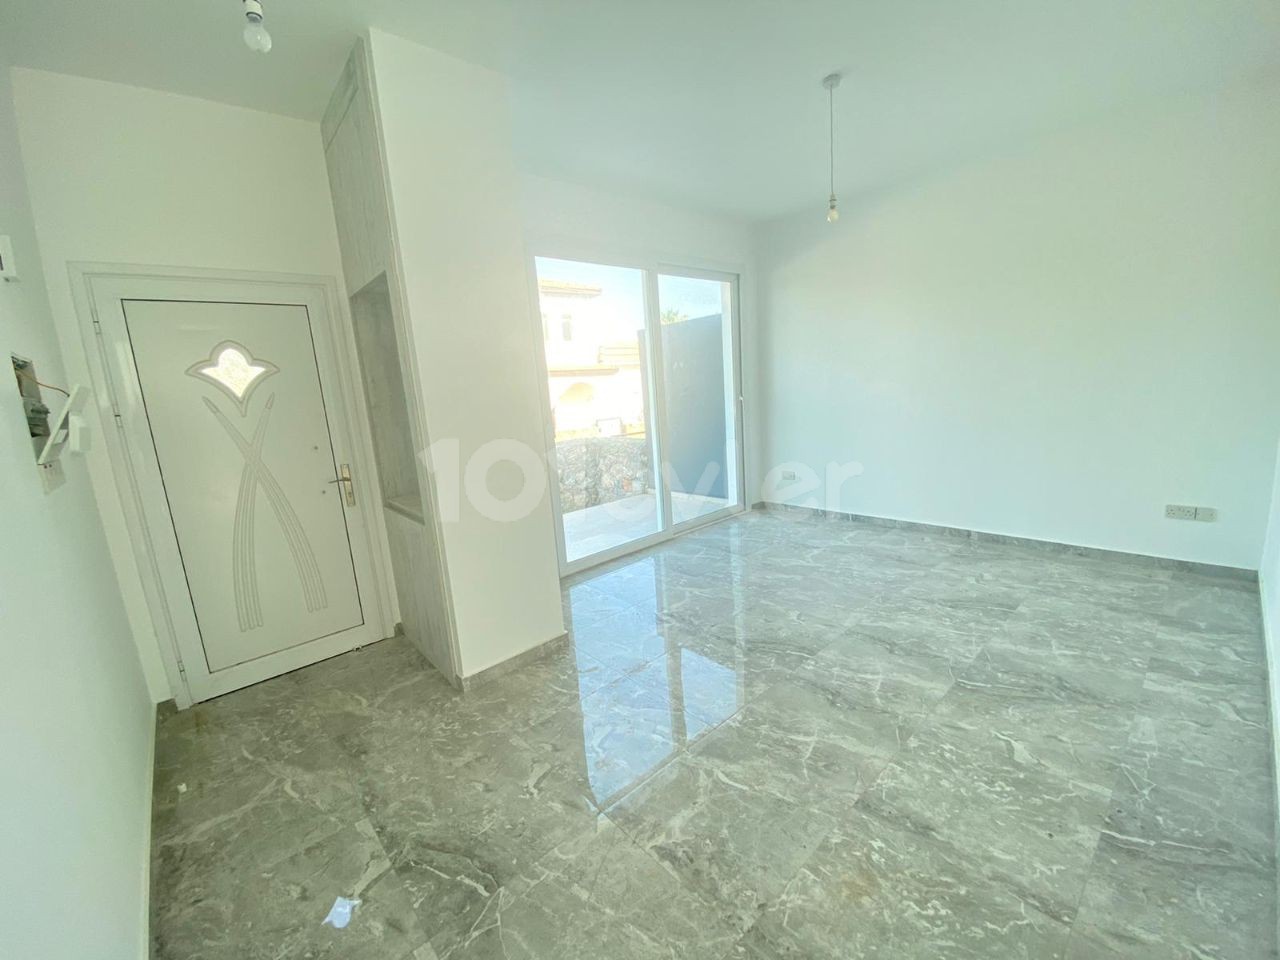 2 + 1, 140 m2 Villas for Sale in Kyrenia Karsiyaka at Prices Starting from STG 110,000 !!! ** 